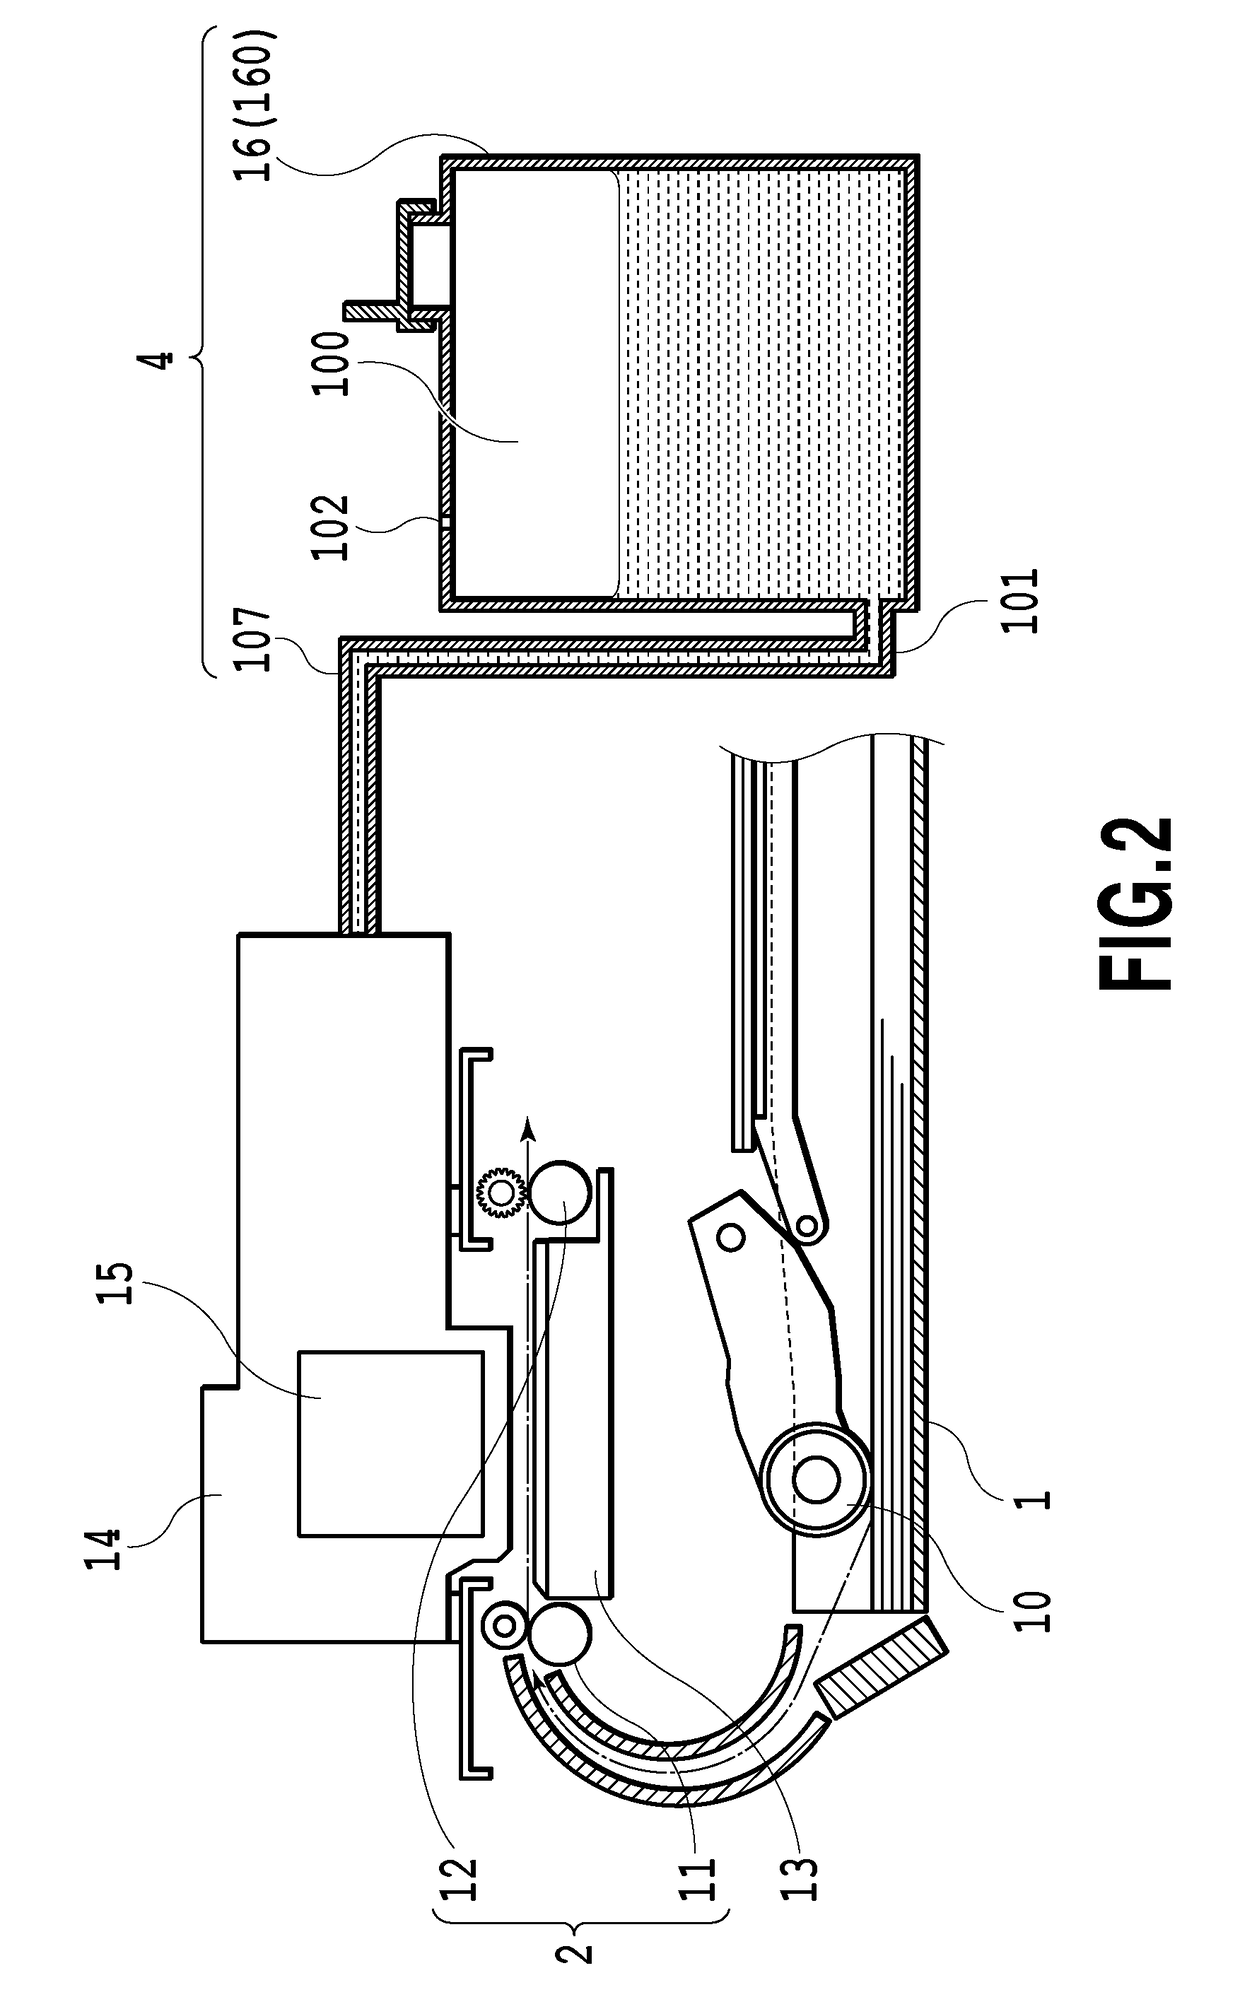 Liquid ejecting apparatus and liquid refilling container